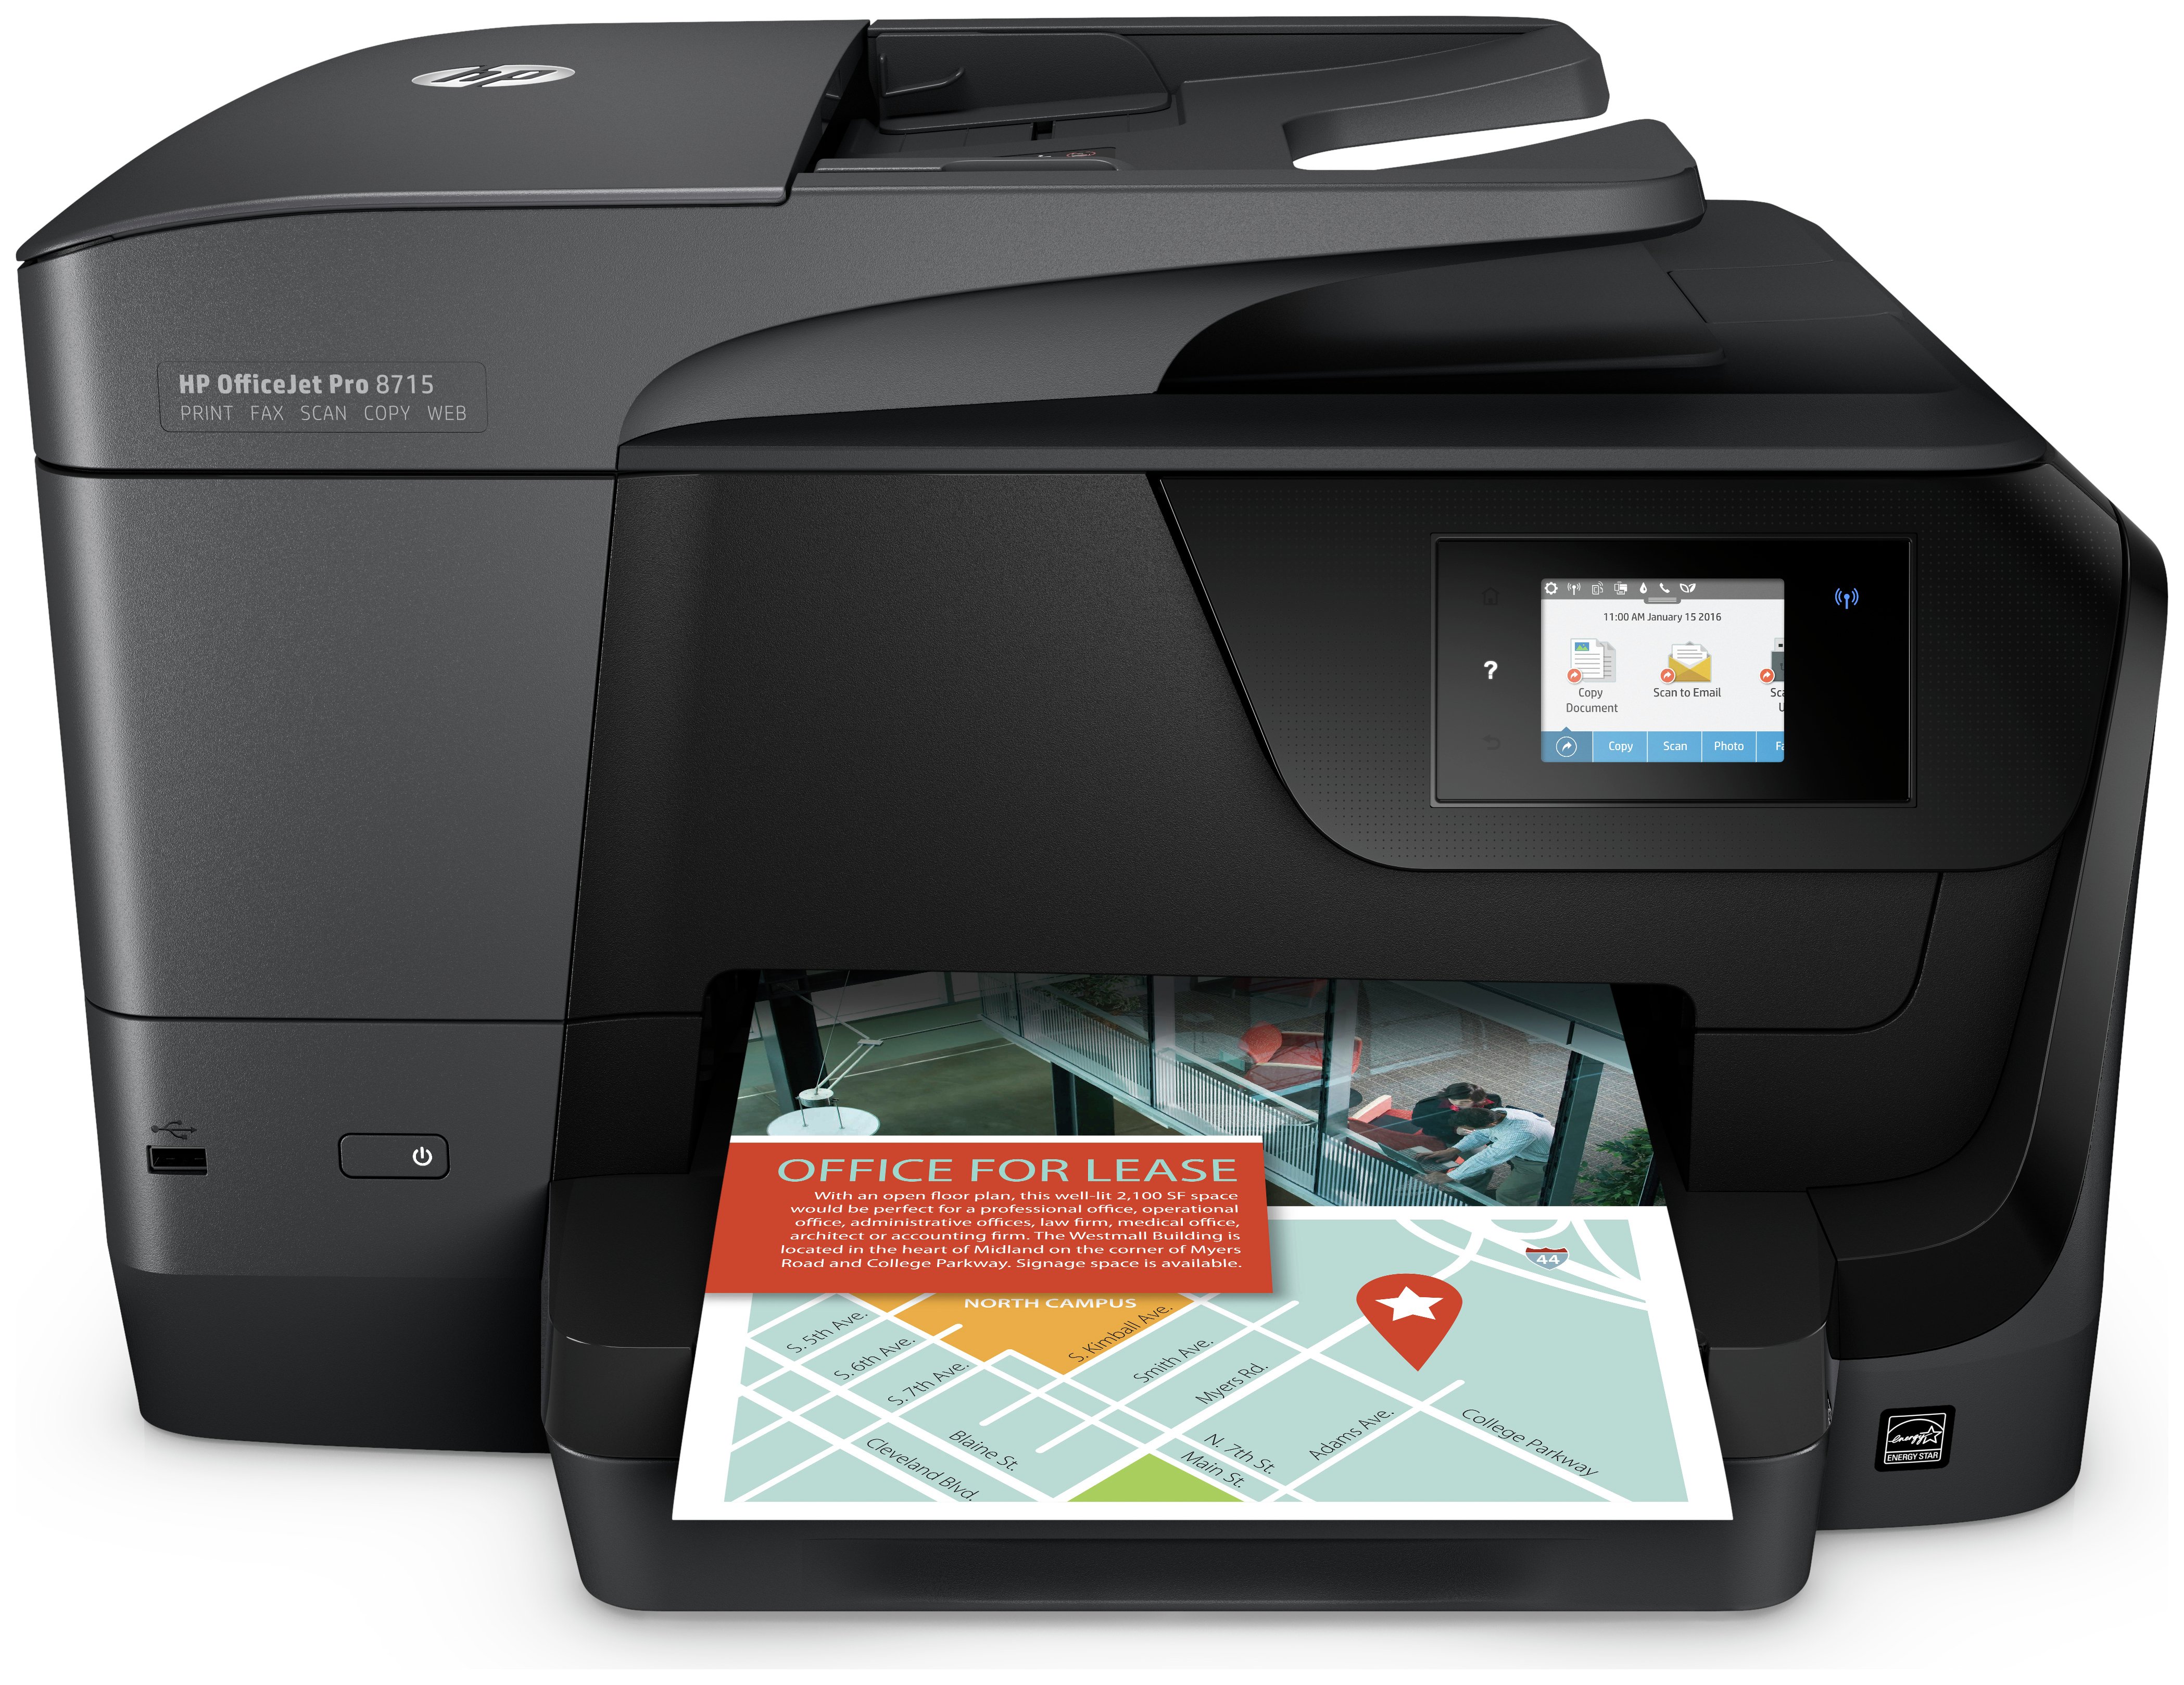 HP OfficeJet Pro 8715 Printer. Review